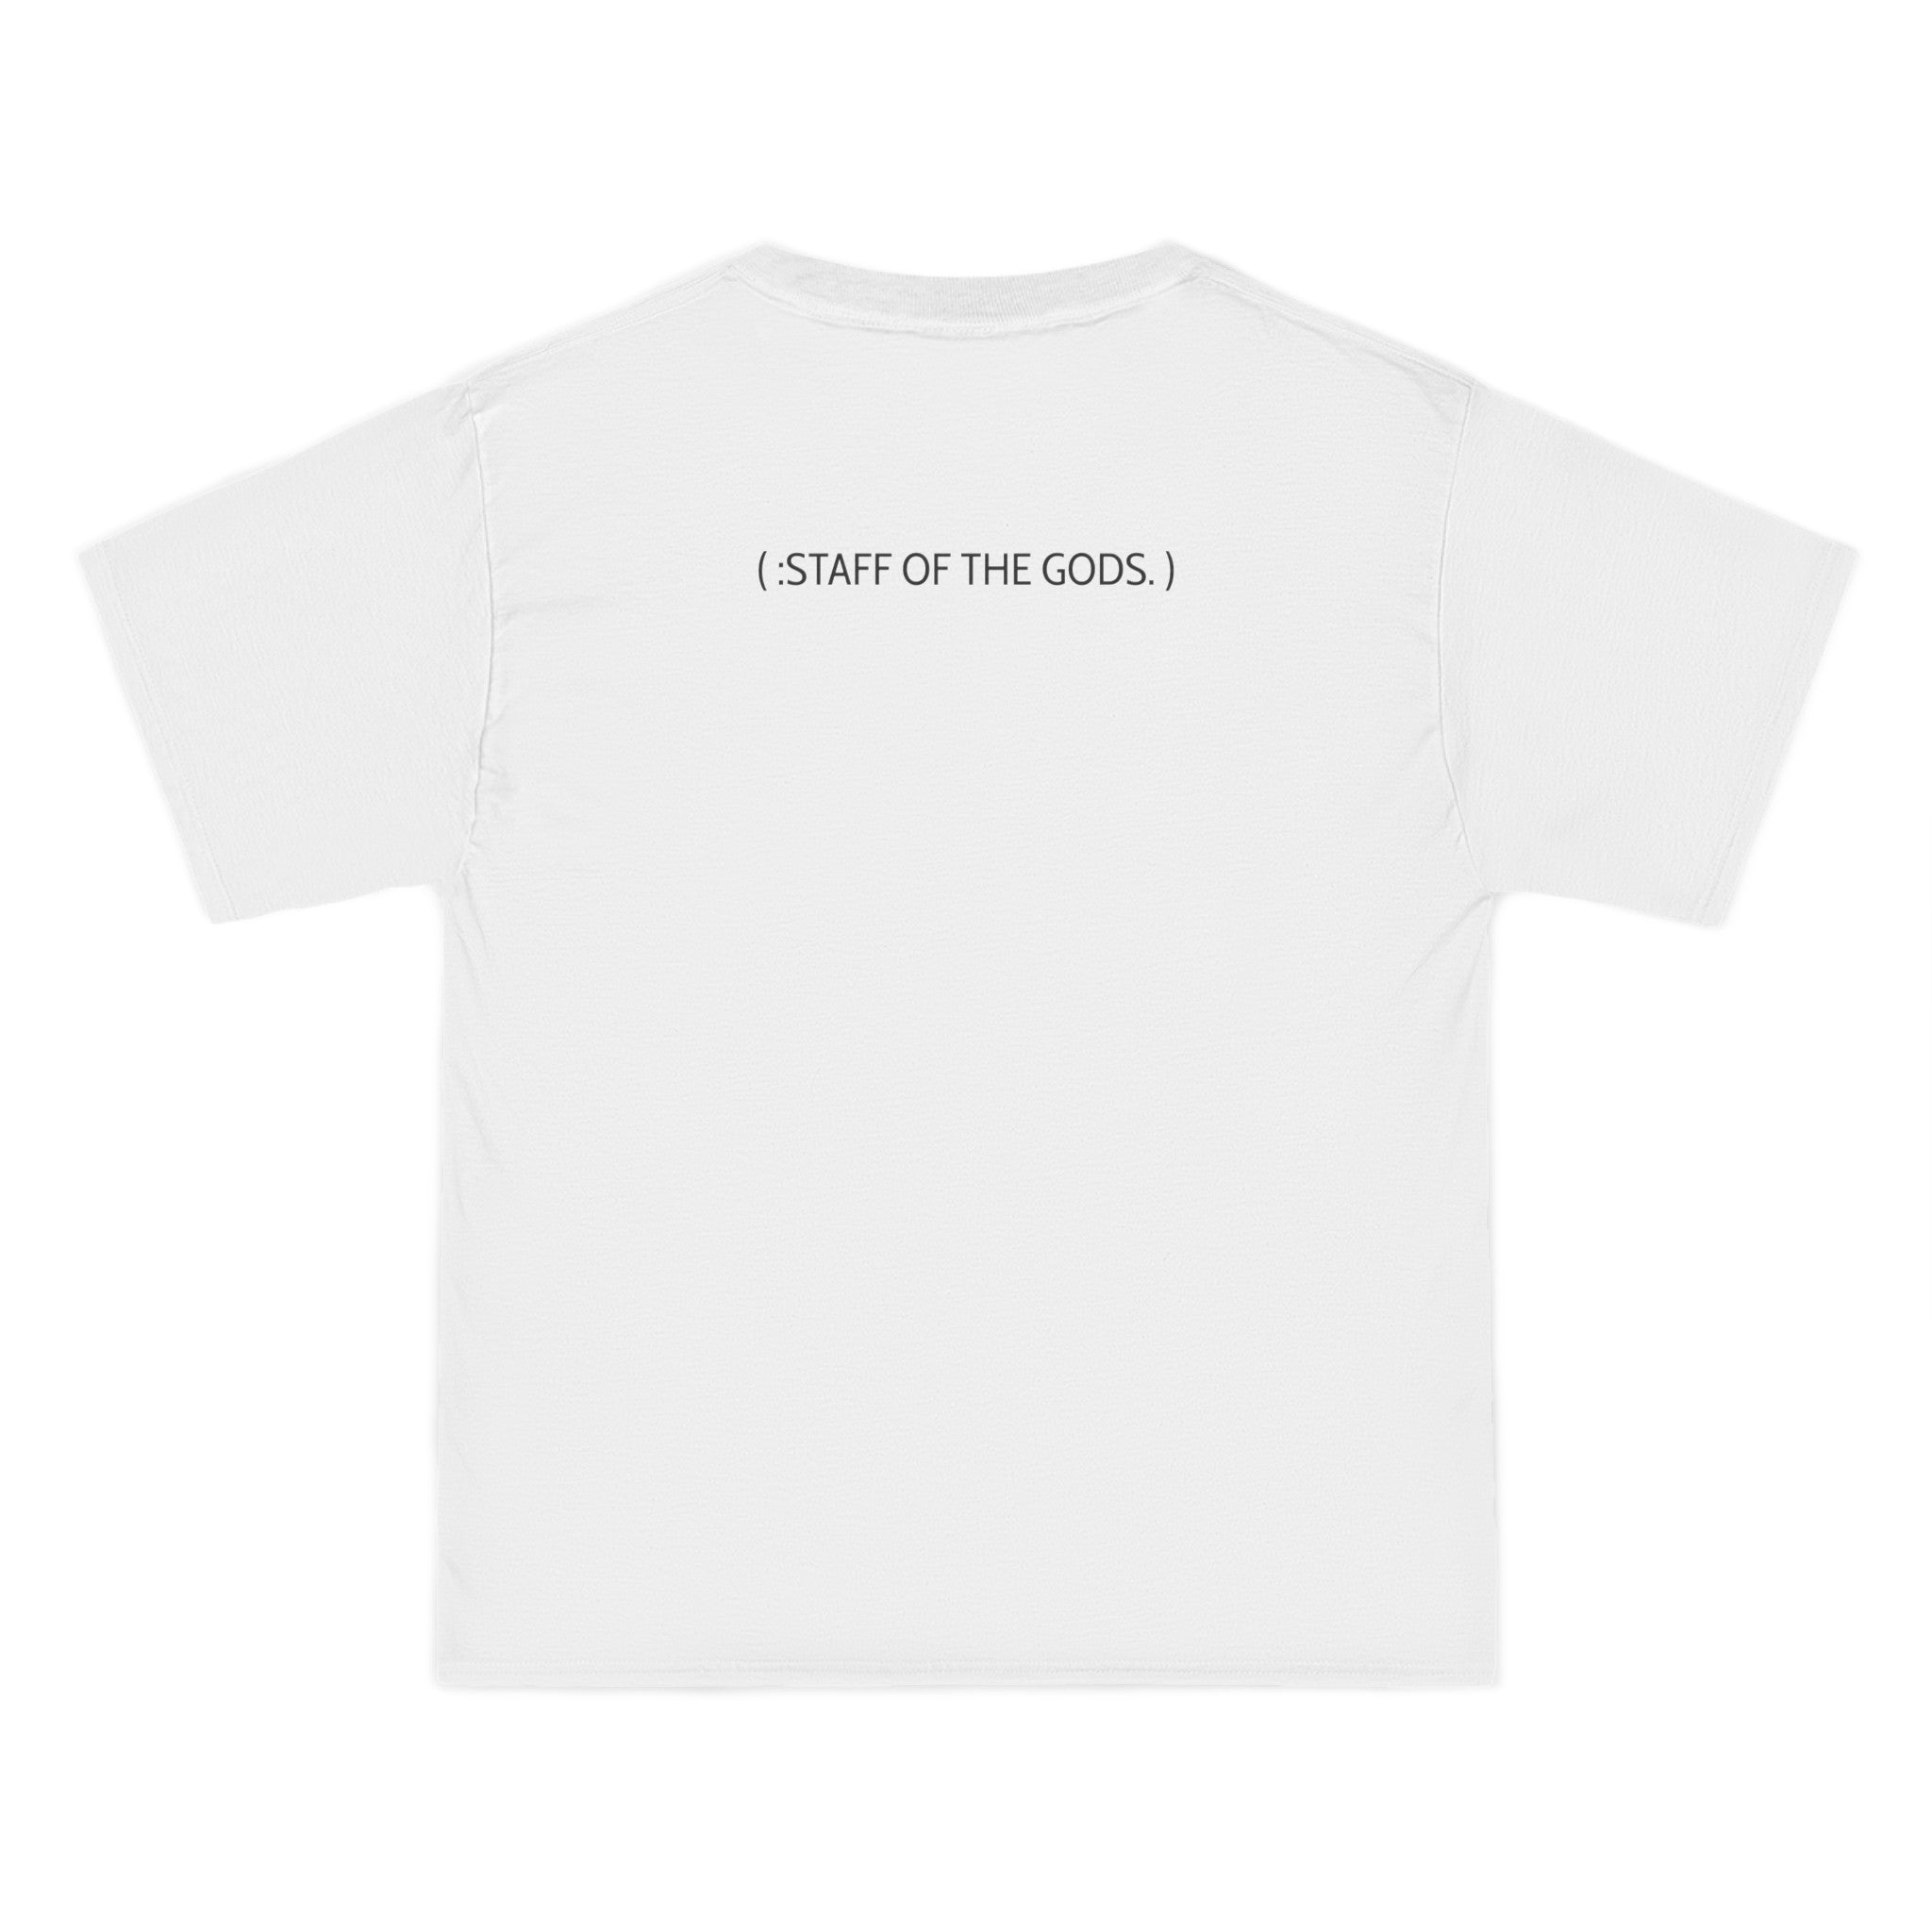 GUSTAVO Beefy-T®  Short-Sleeve T-Shirt